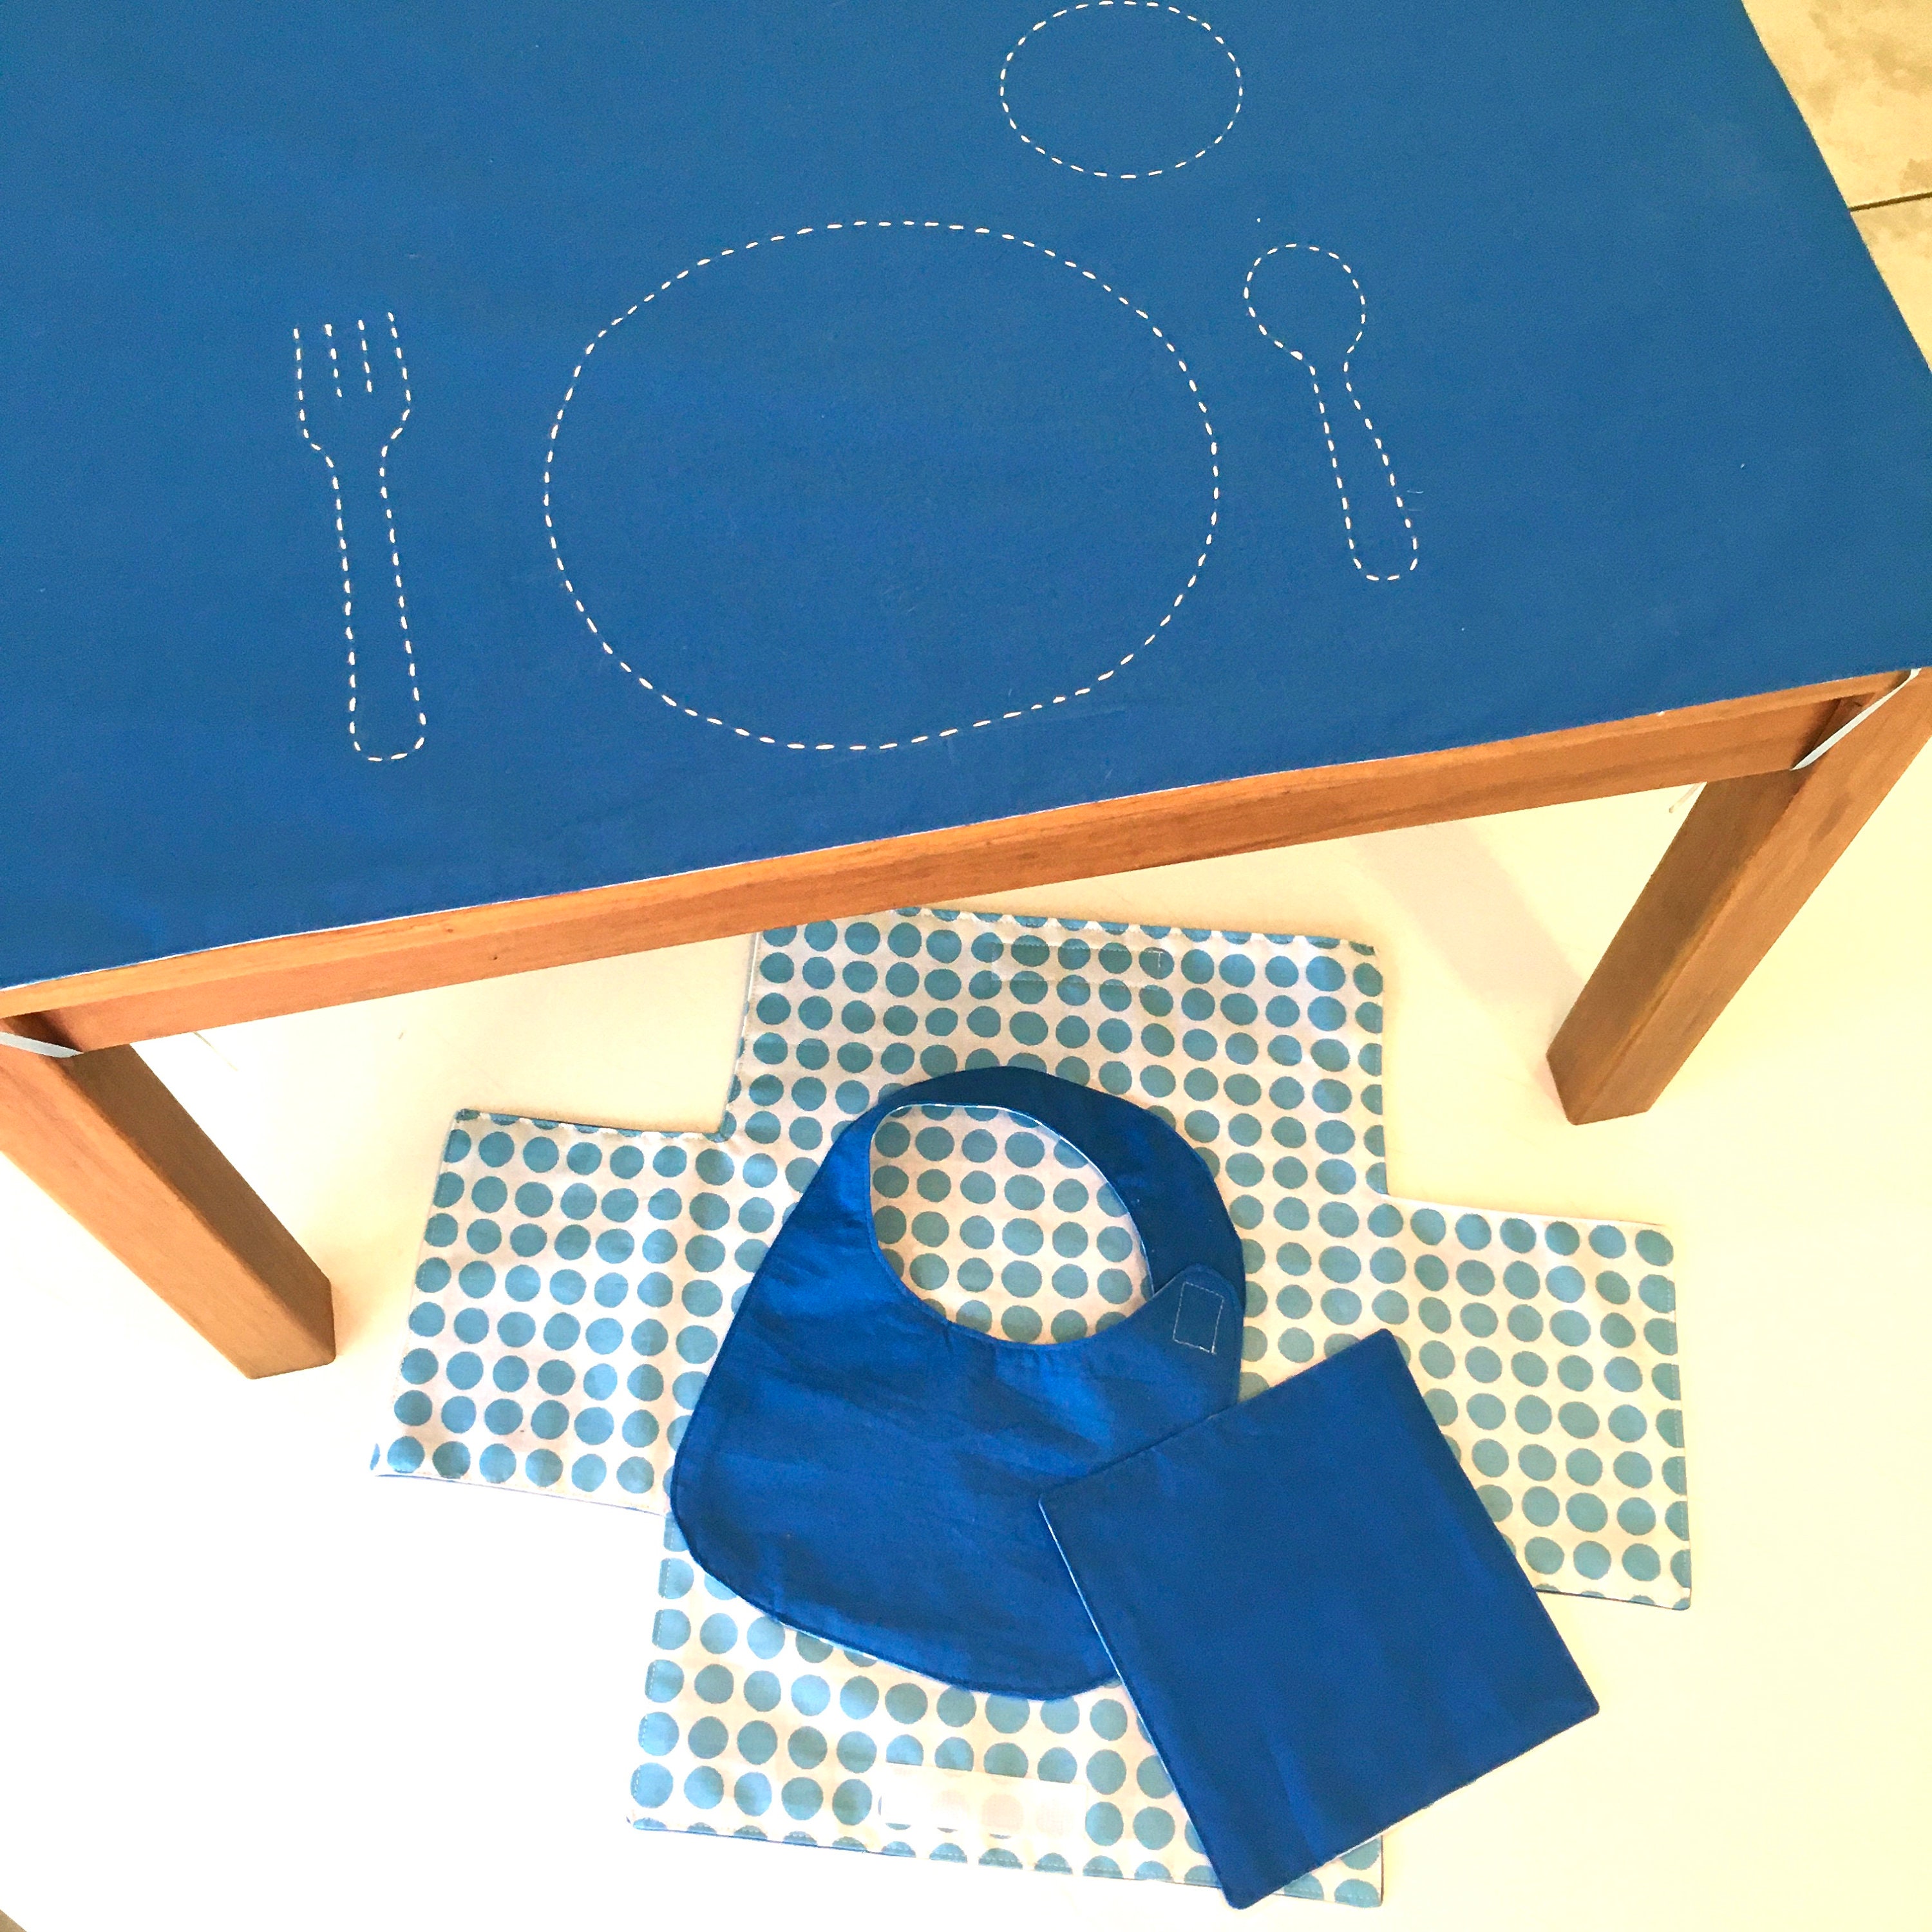 Montessori Sewing Kit – Montessorily